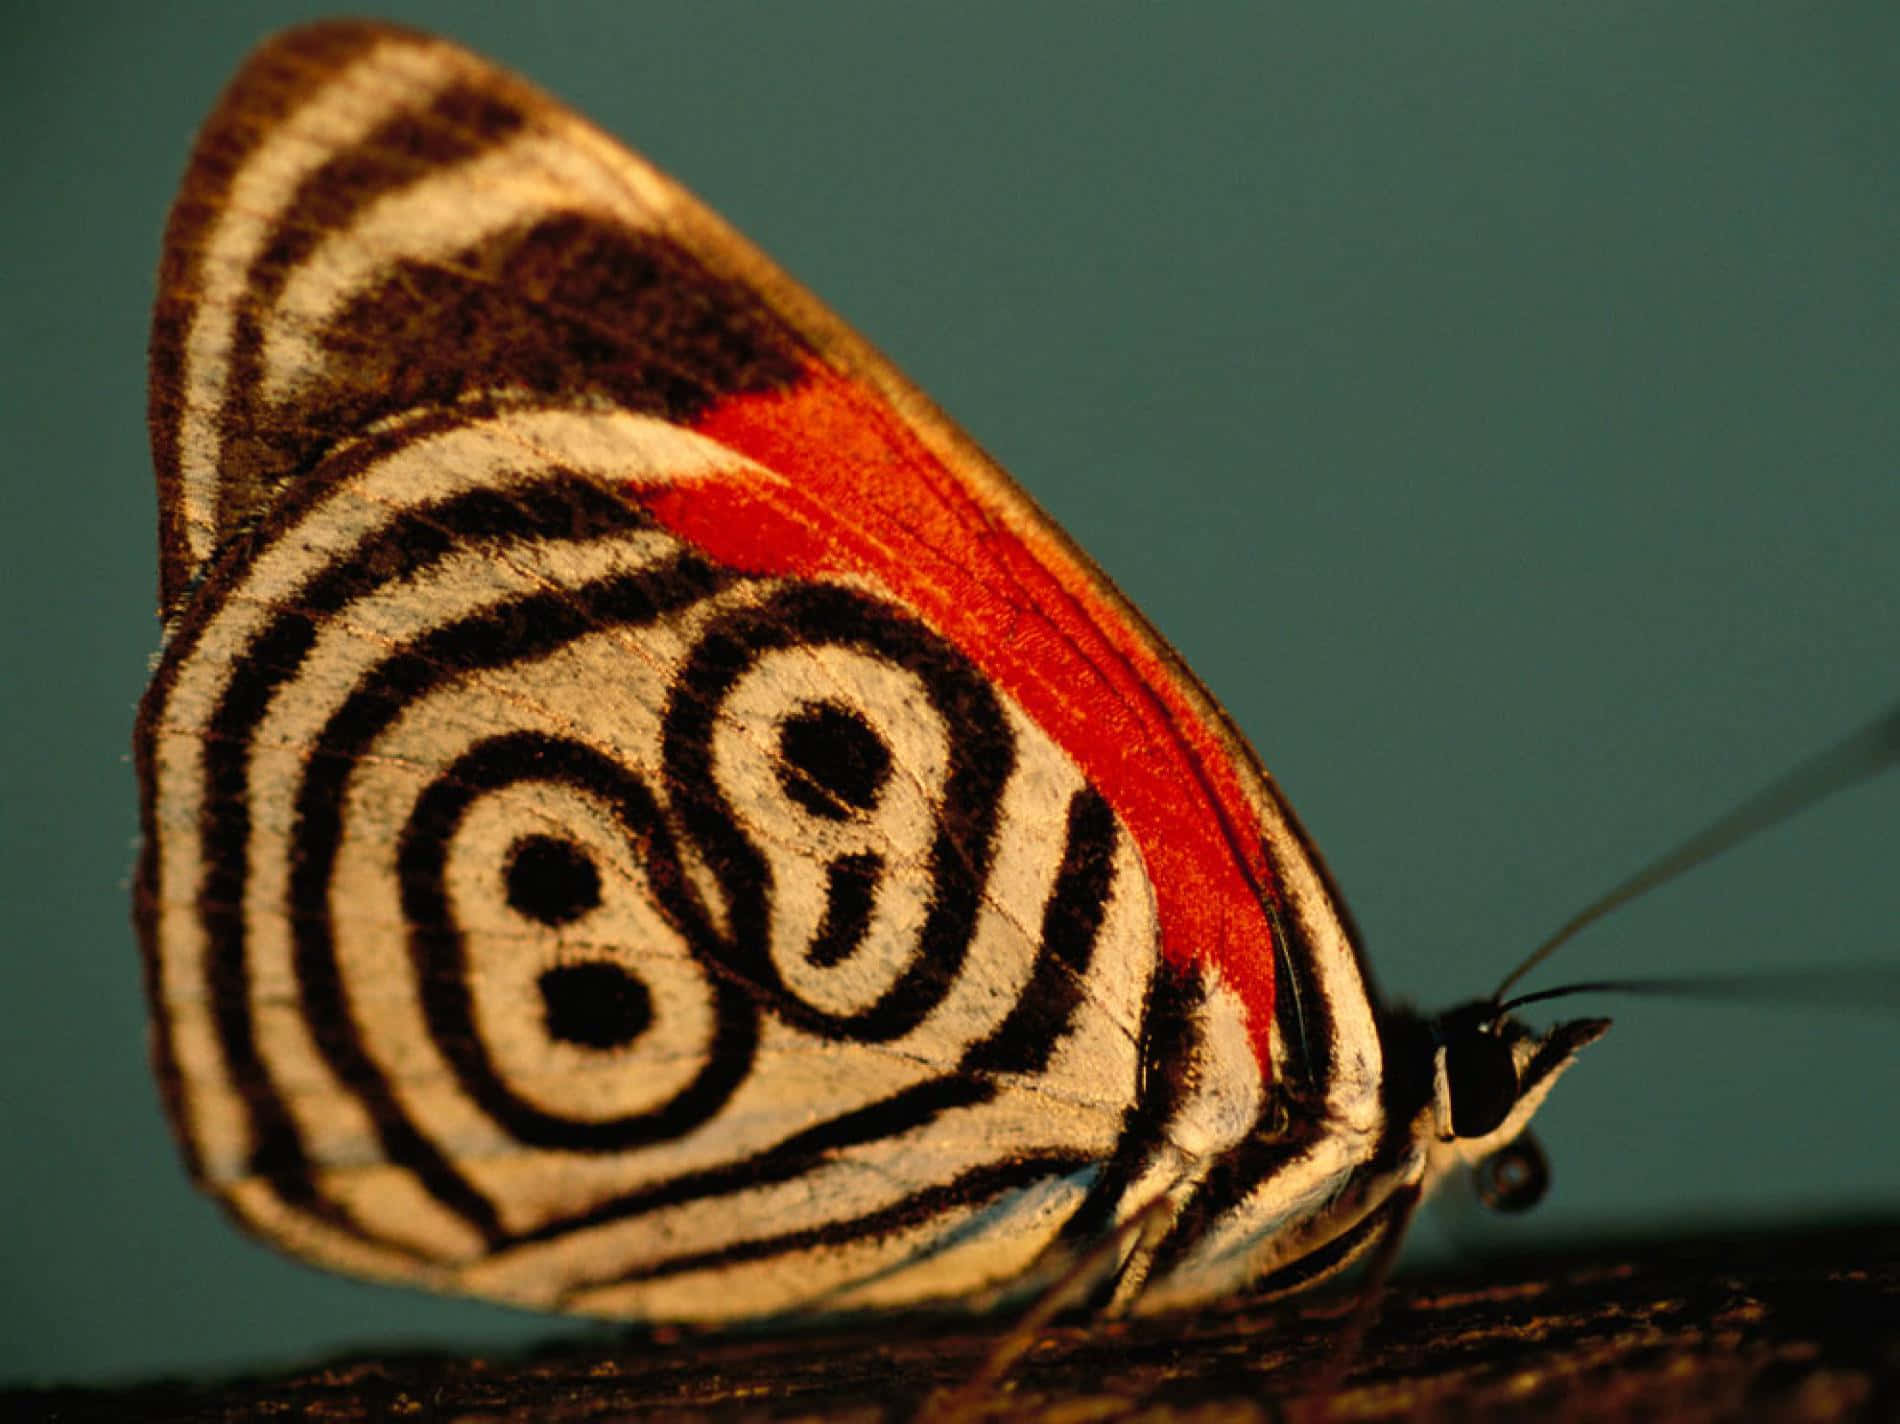 "The Joy of Capturing Butterflies - Butterfly Photography" Wallpaper